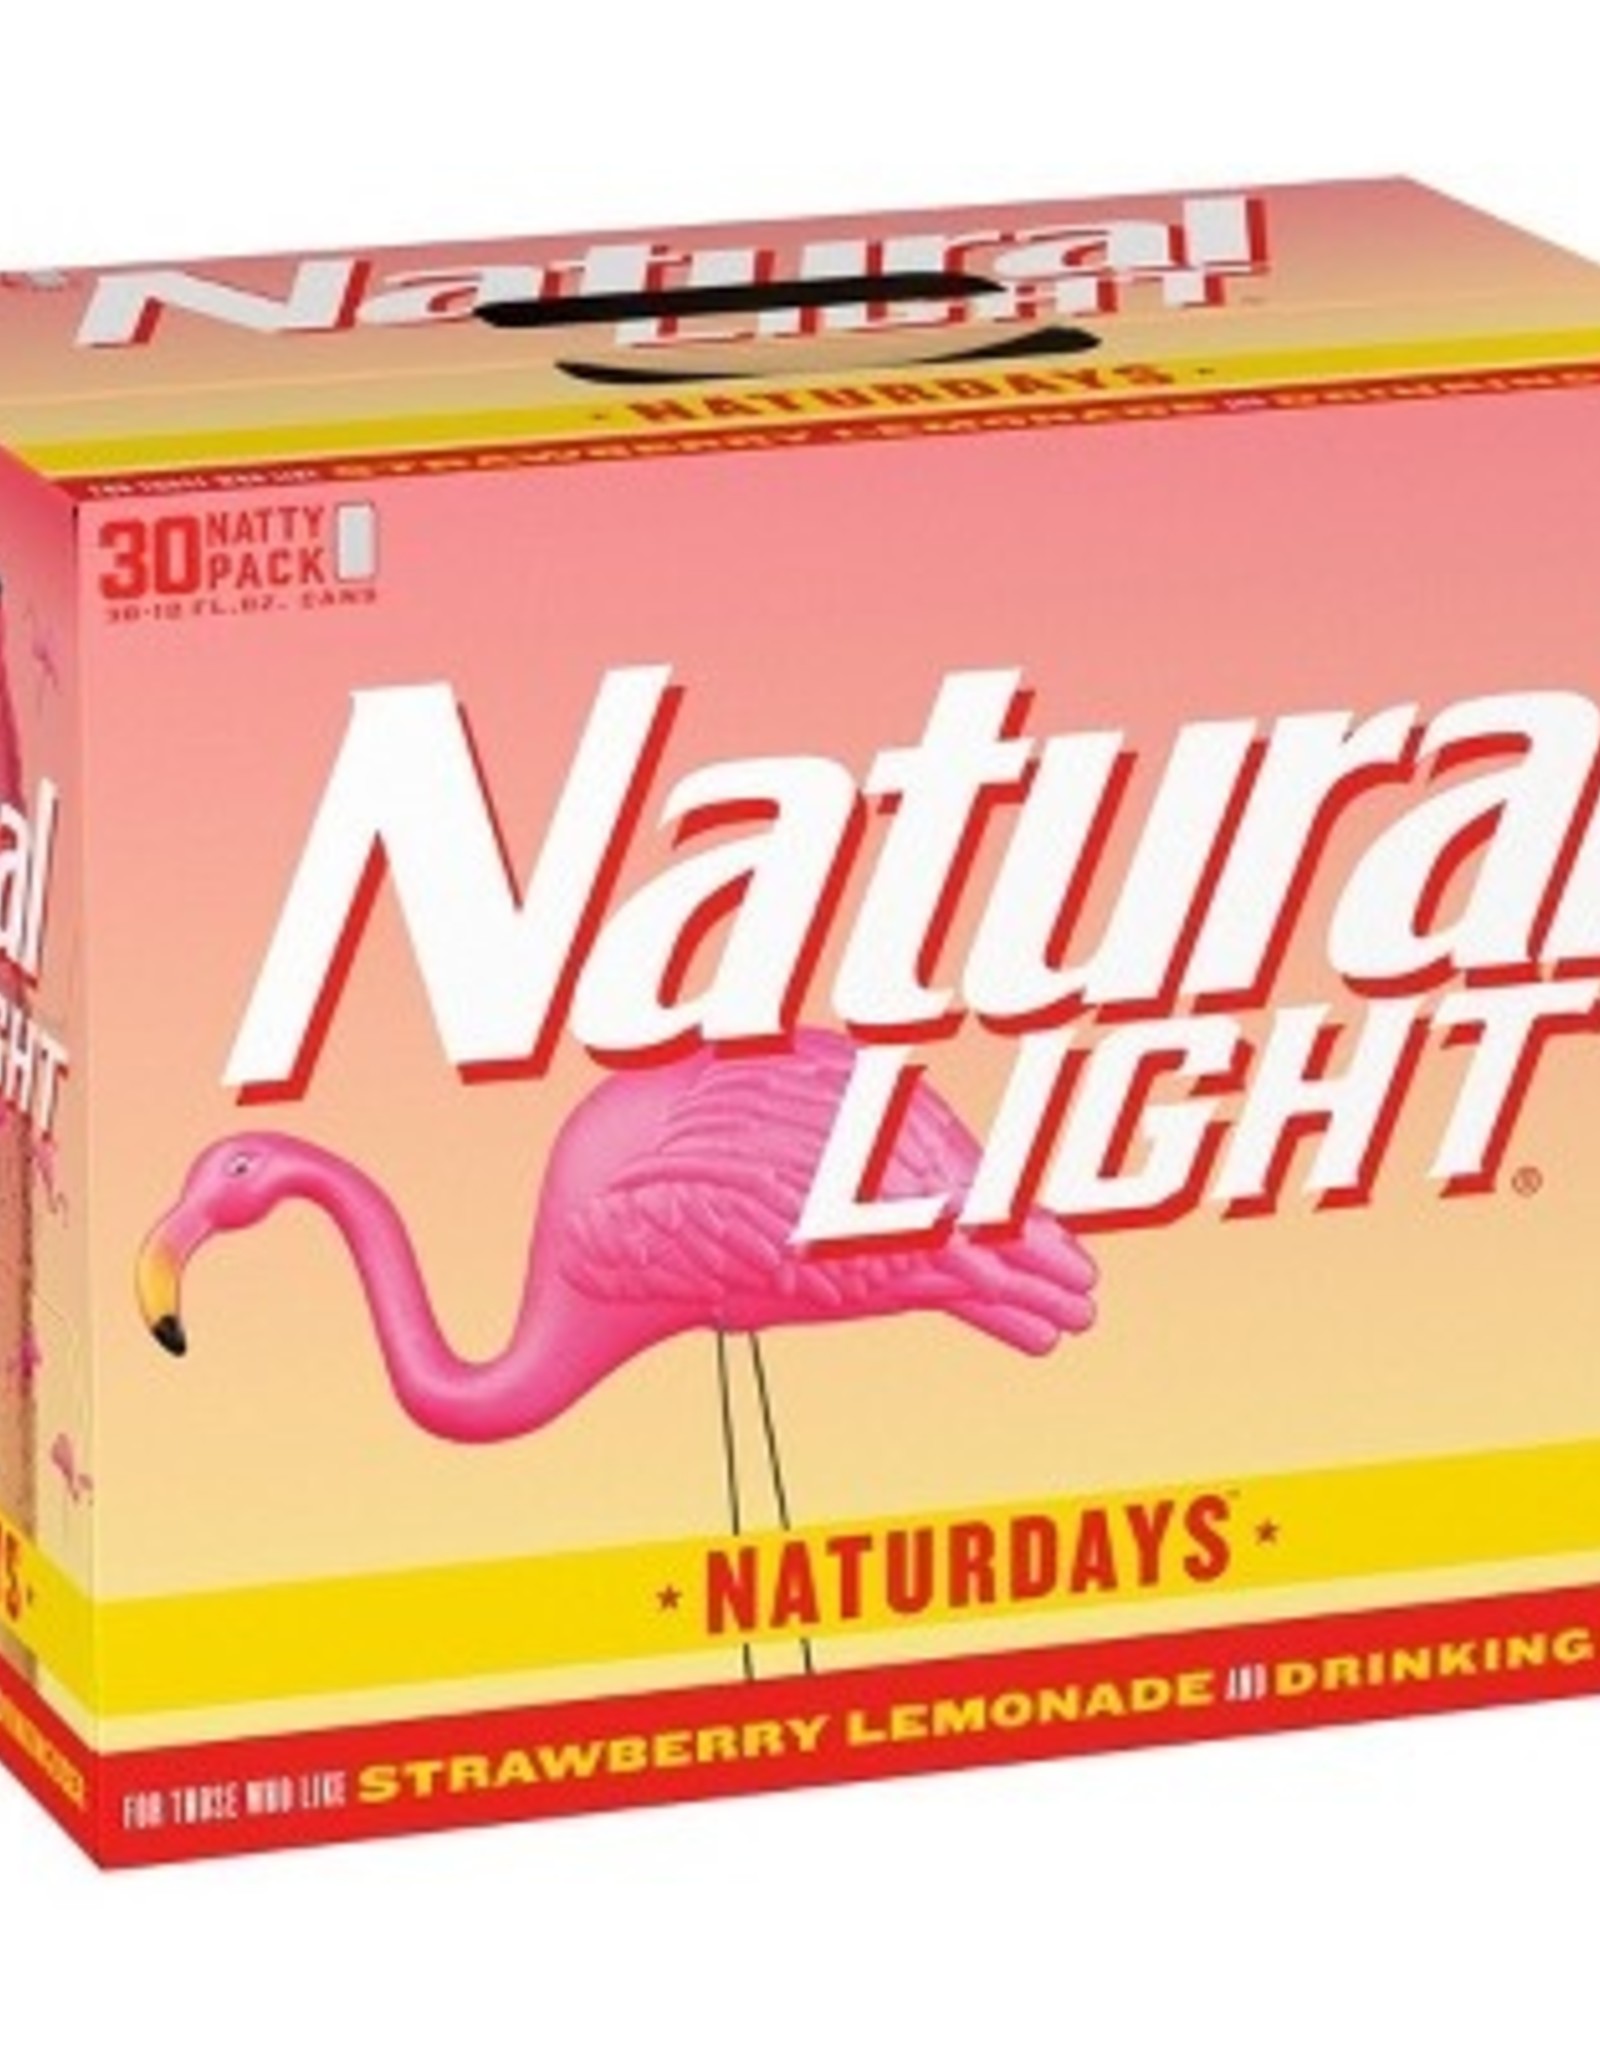 Natural Light Naturdays 12x12 oz cans